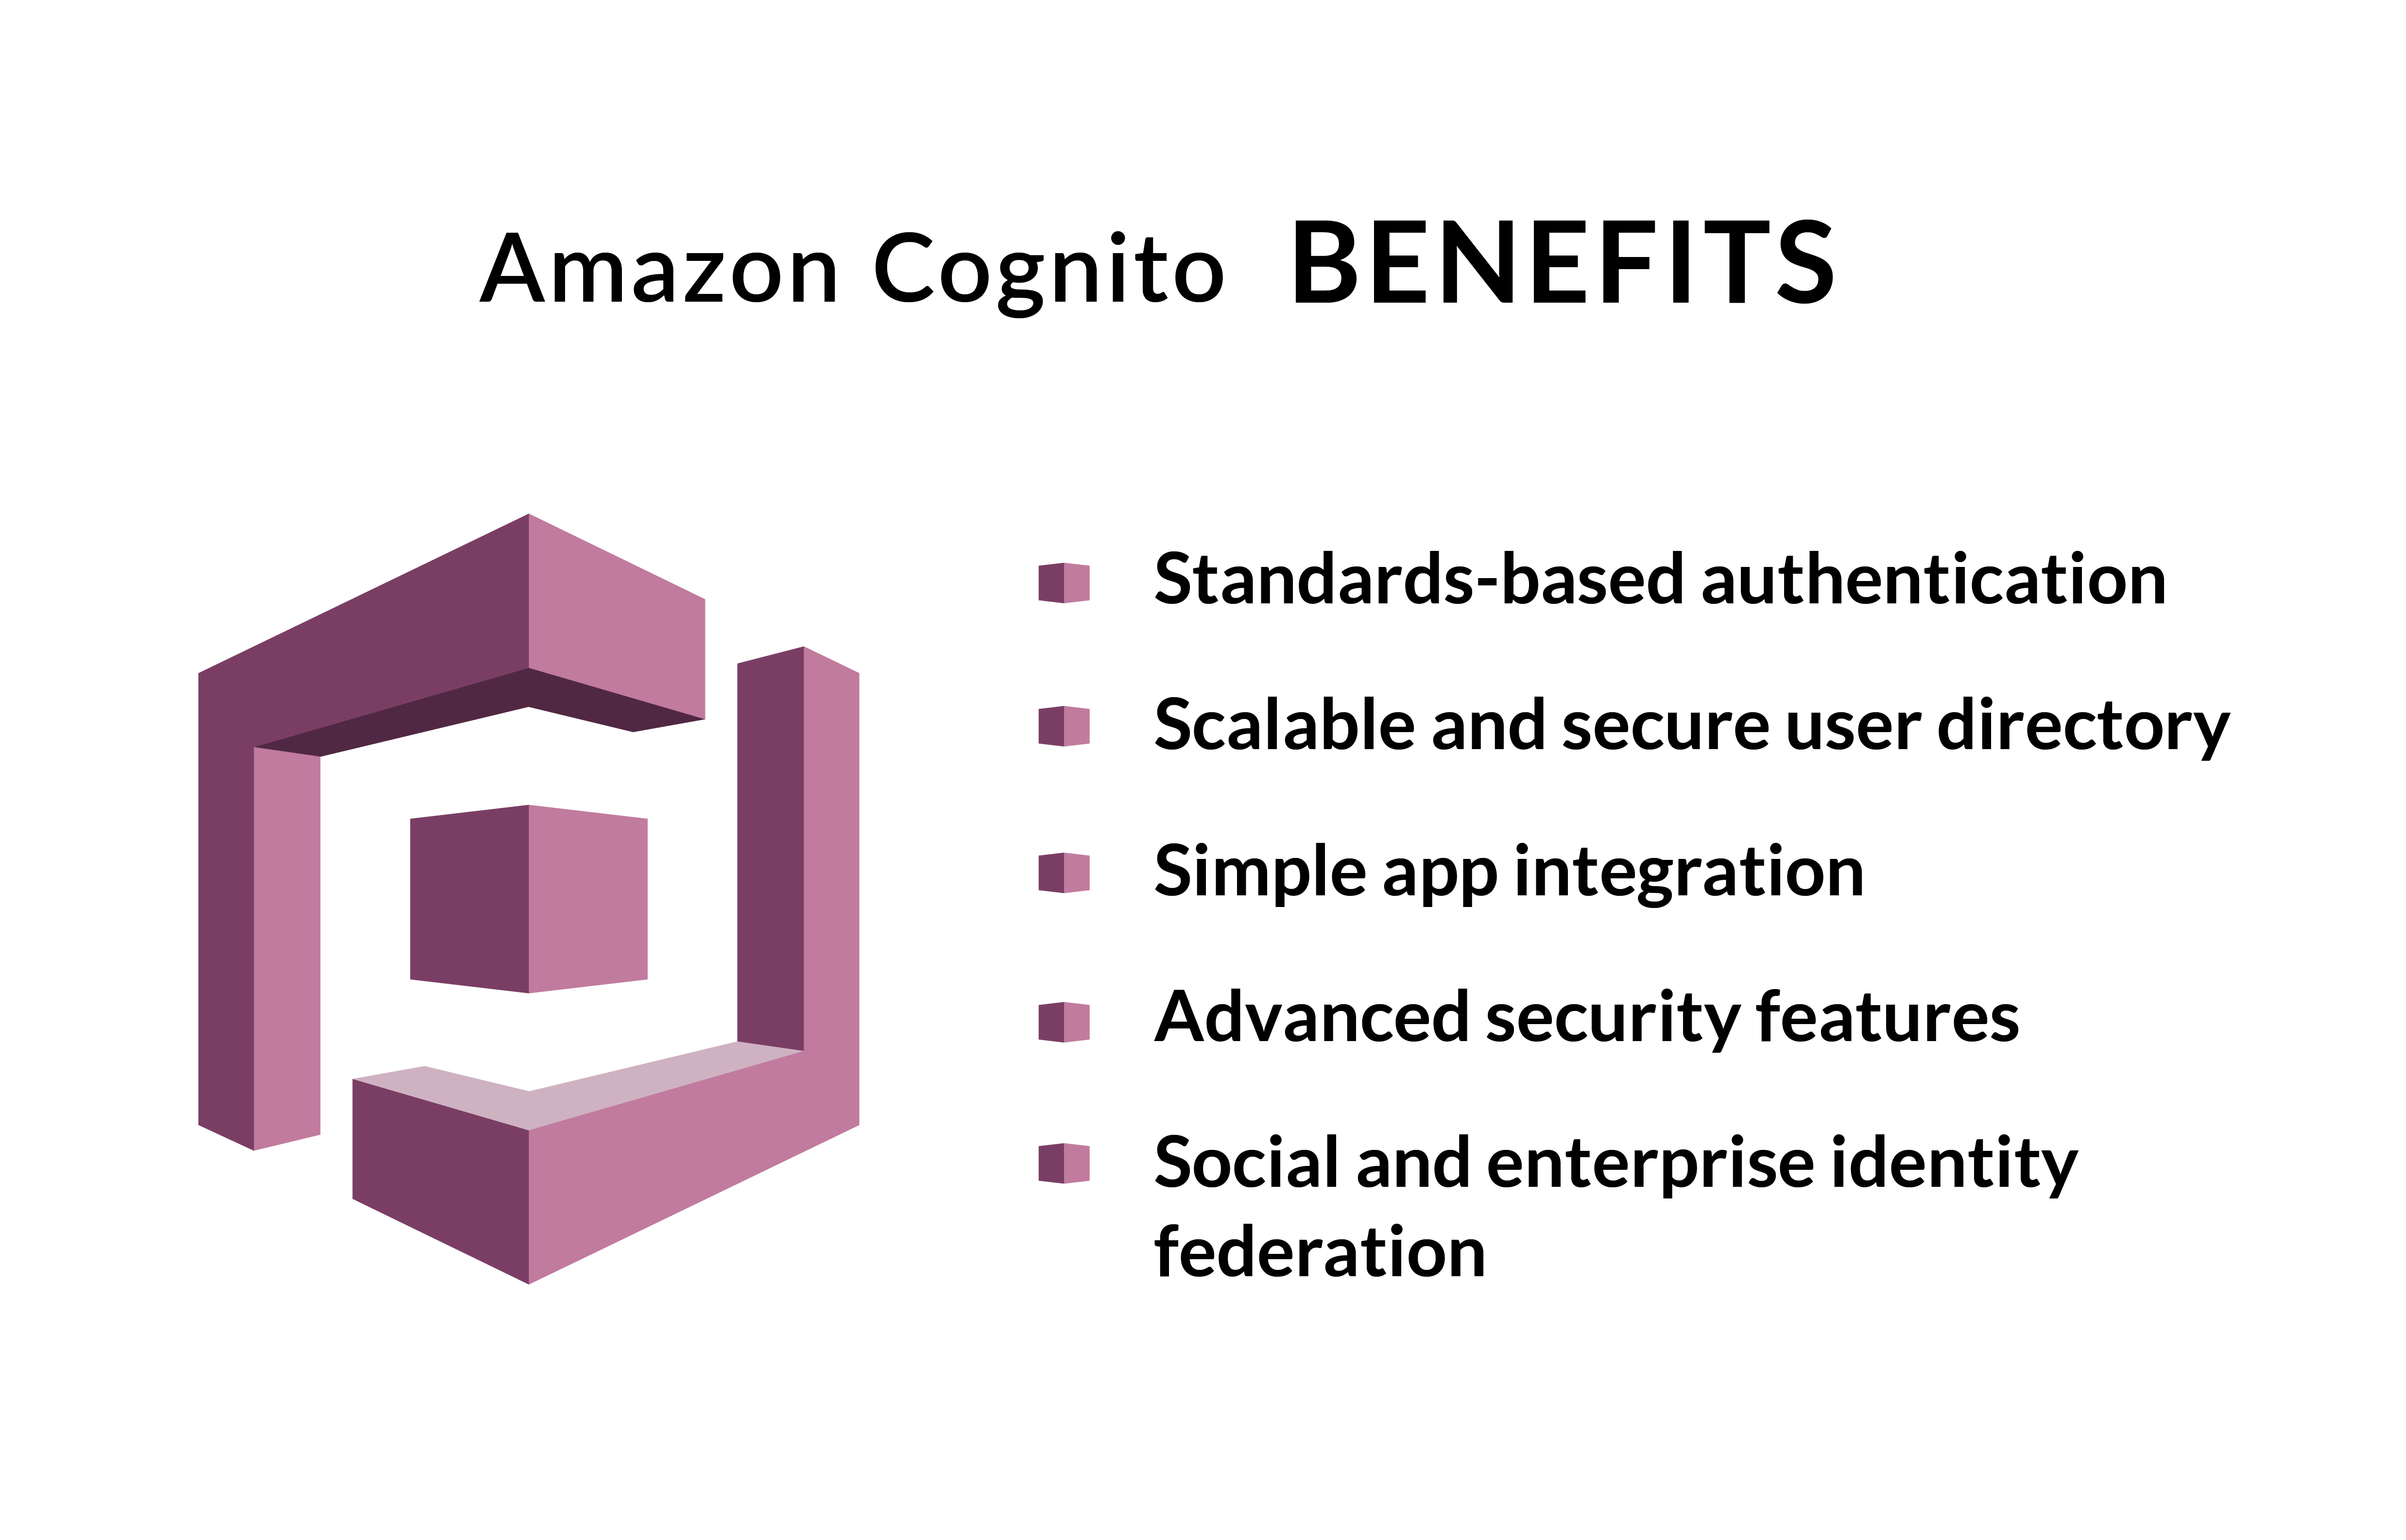 Amazon Cognito benefits